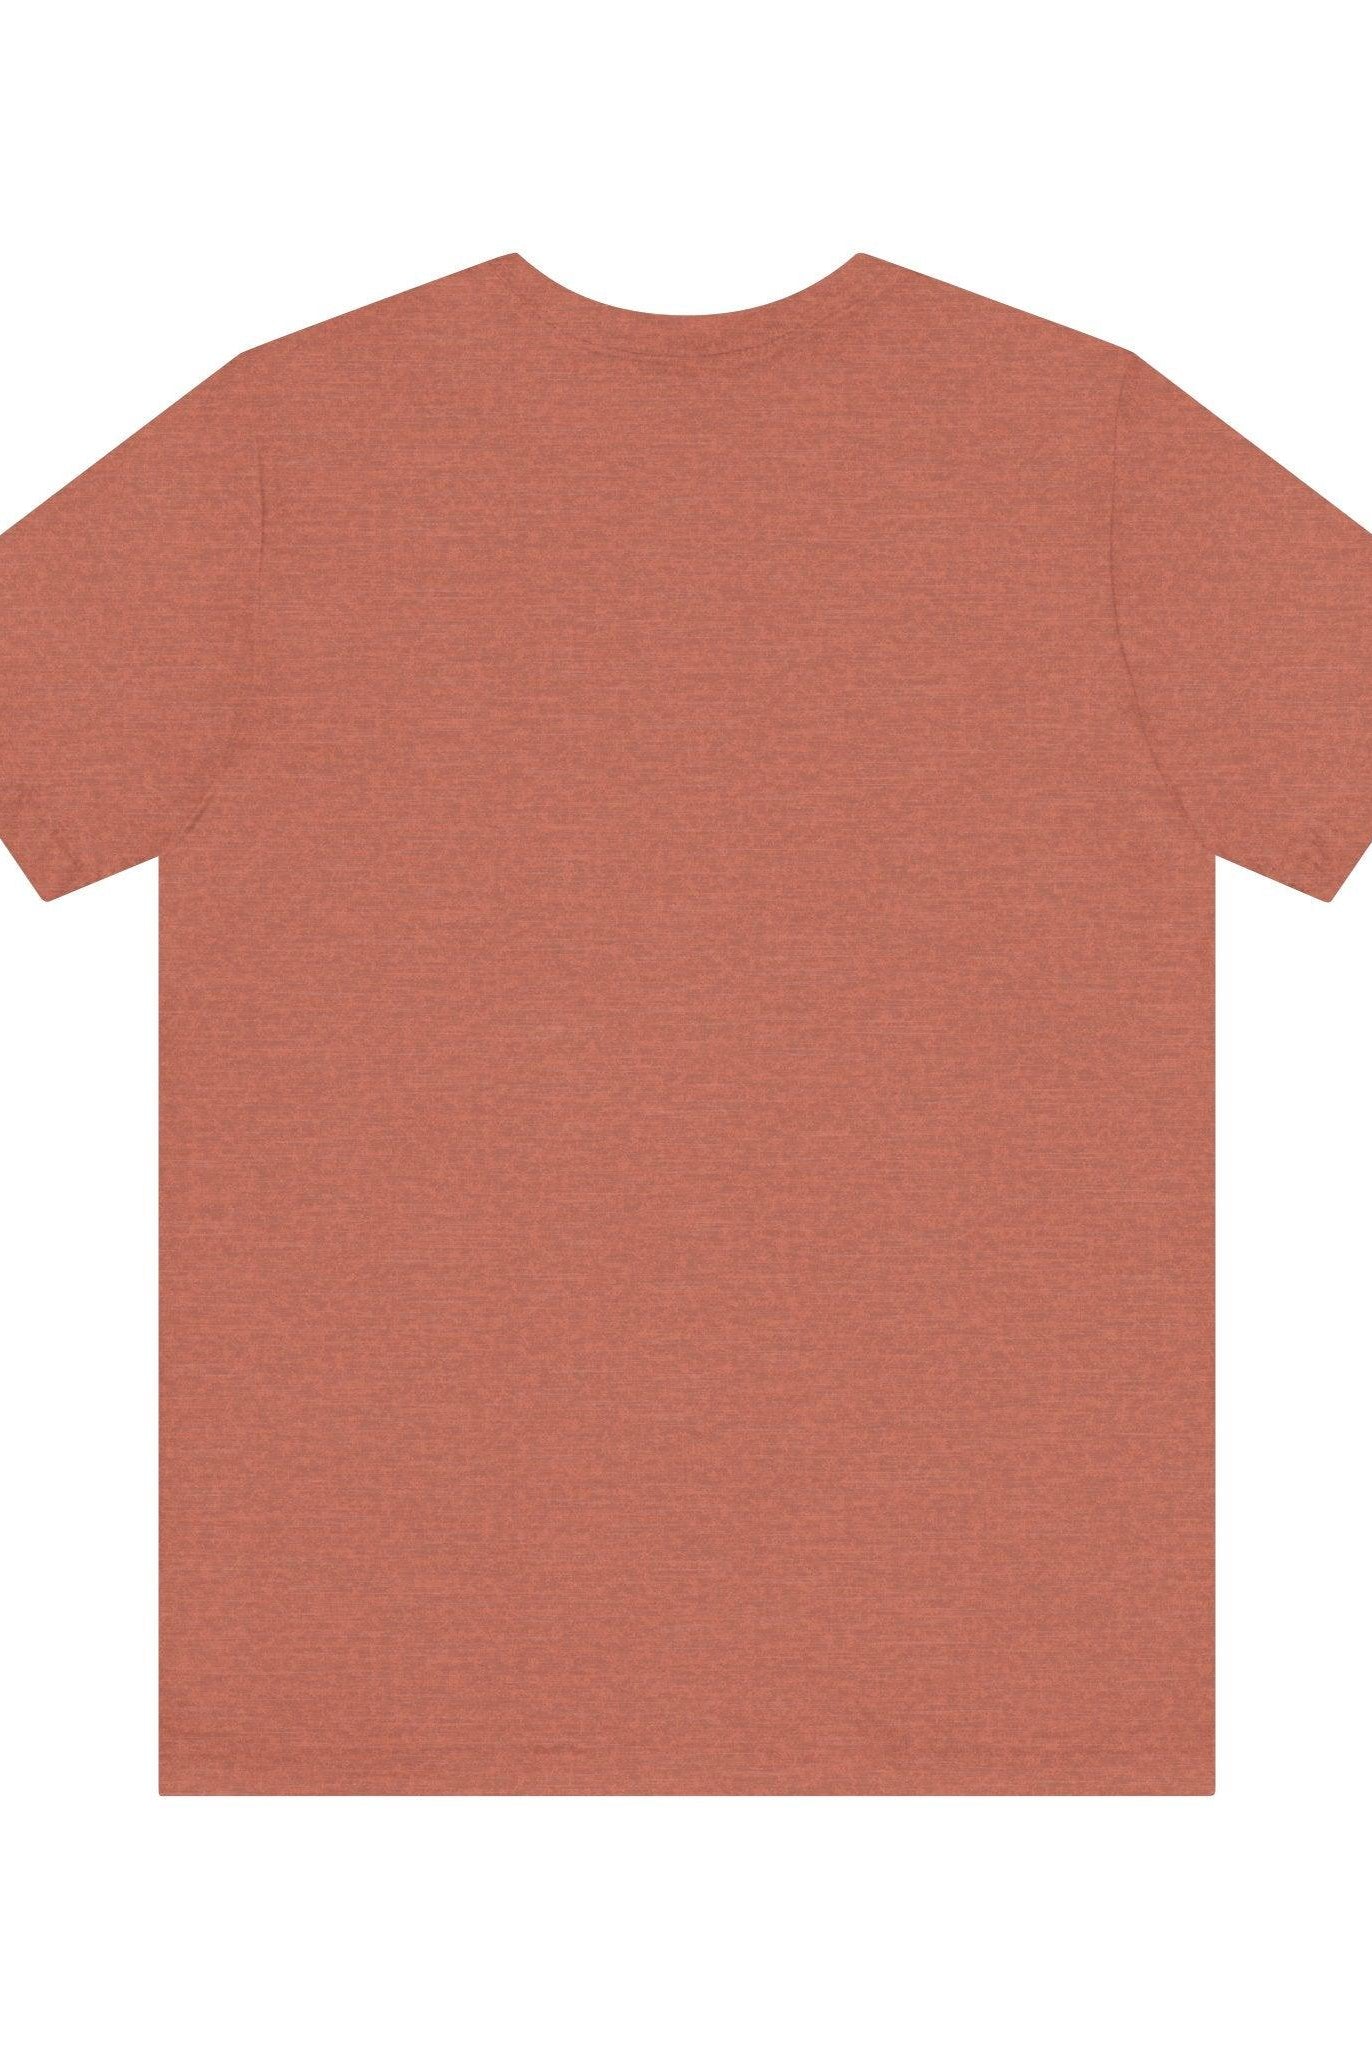 Hello Summer Doodle T-Shirt - Unisex Jersey Short Sleeve Tee - Soulshinecreators